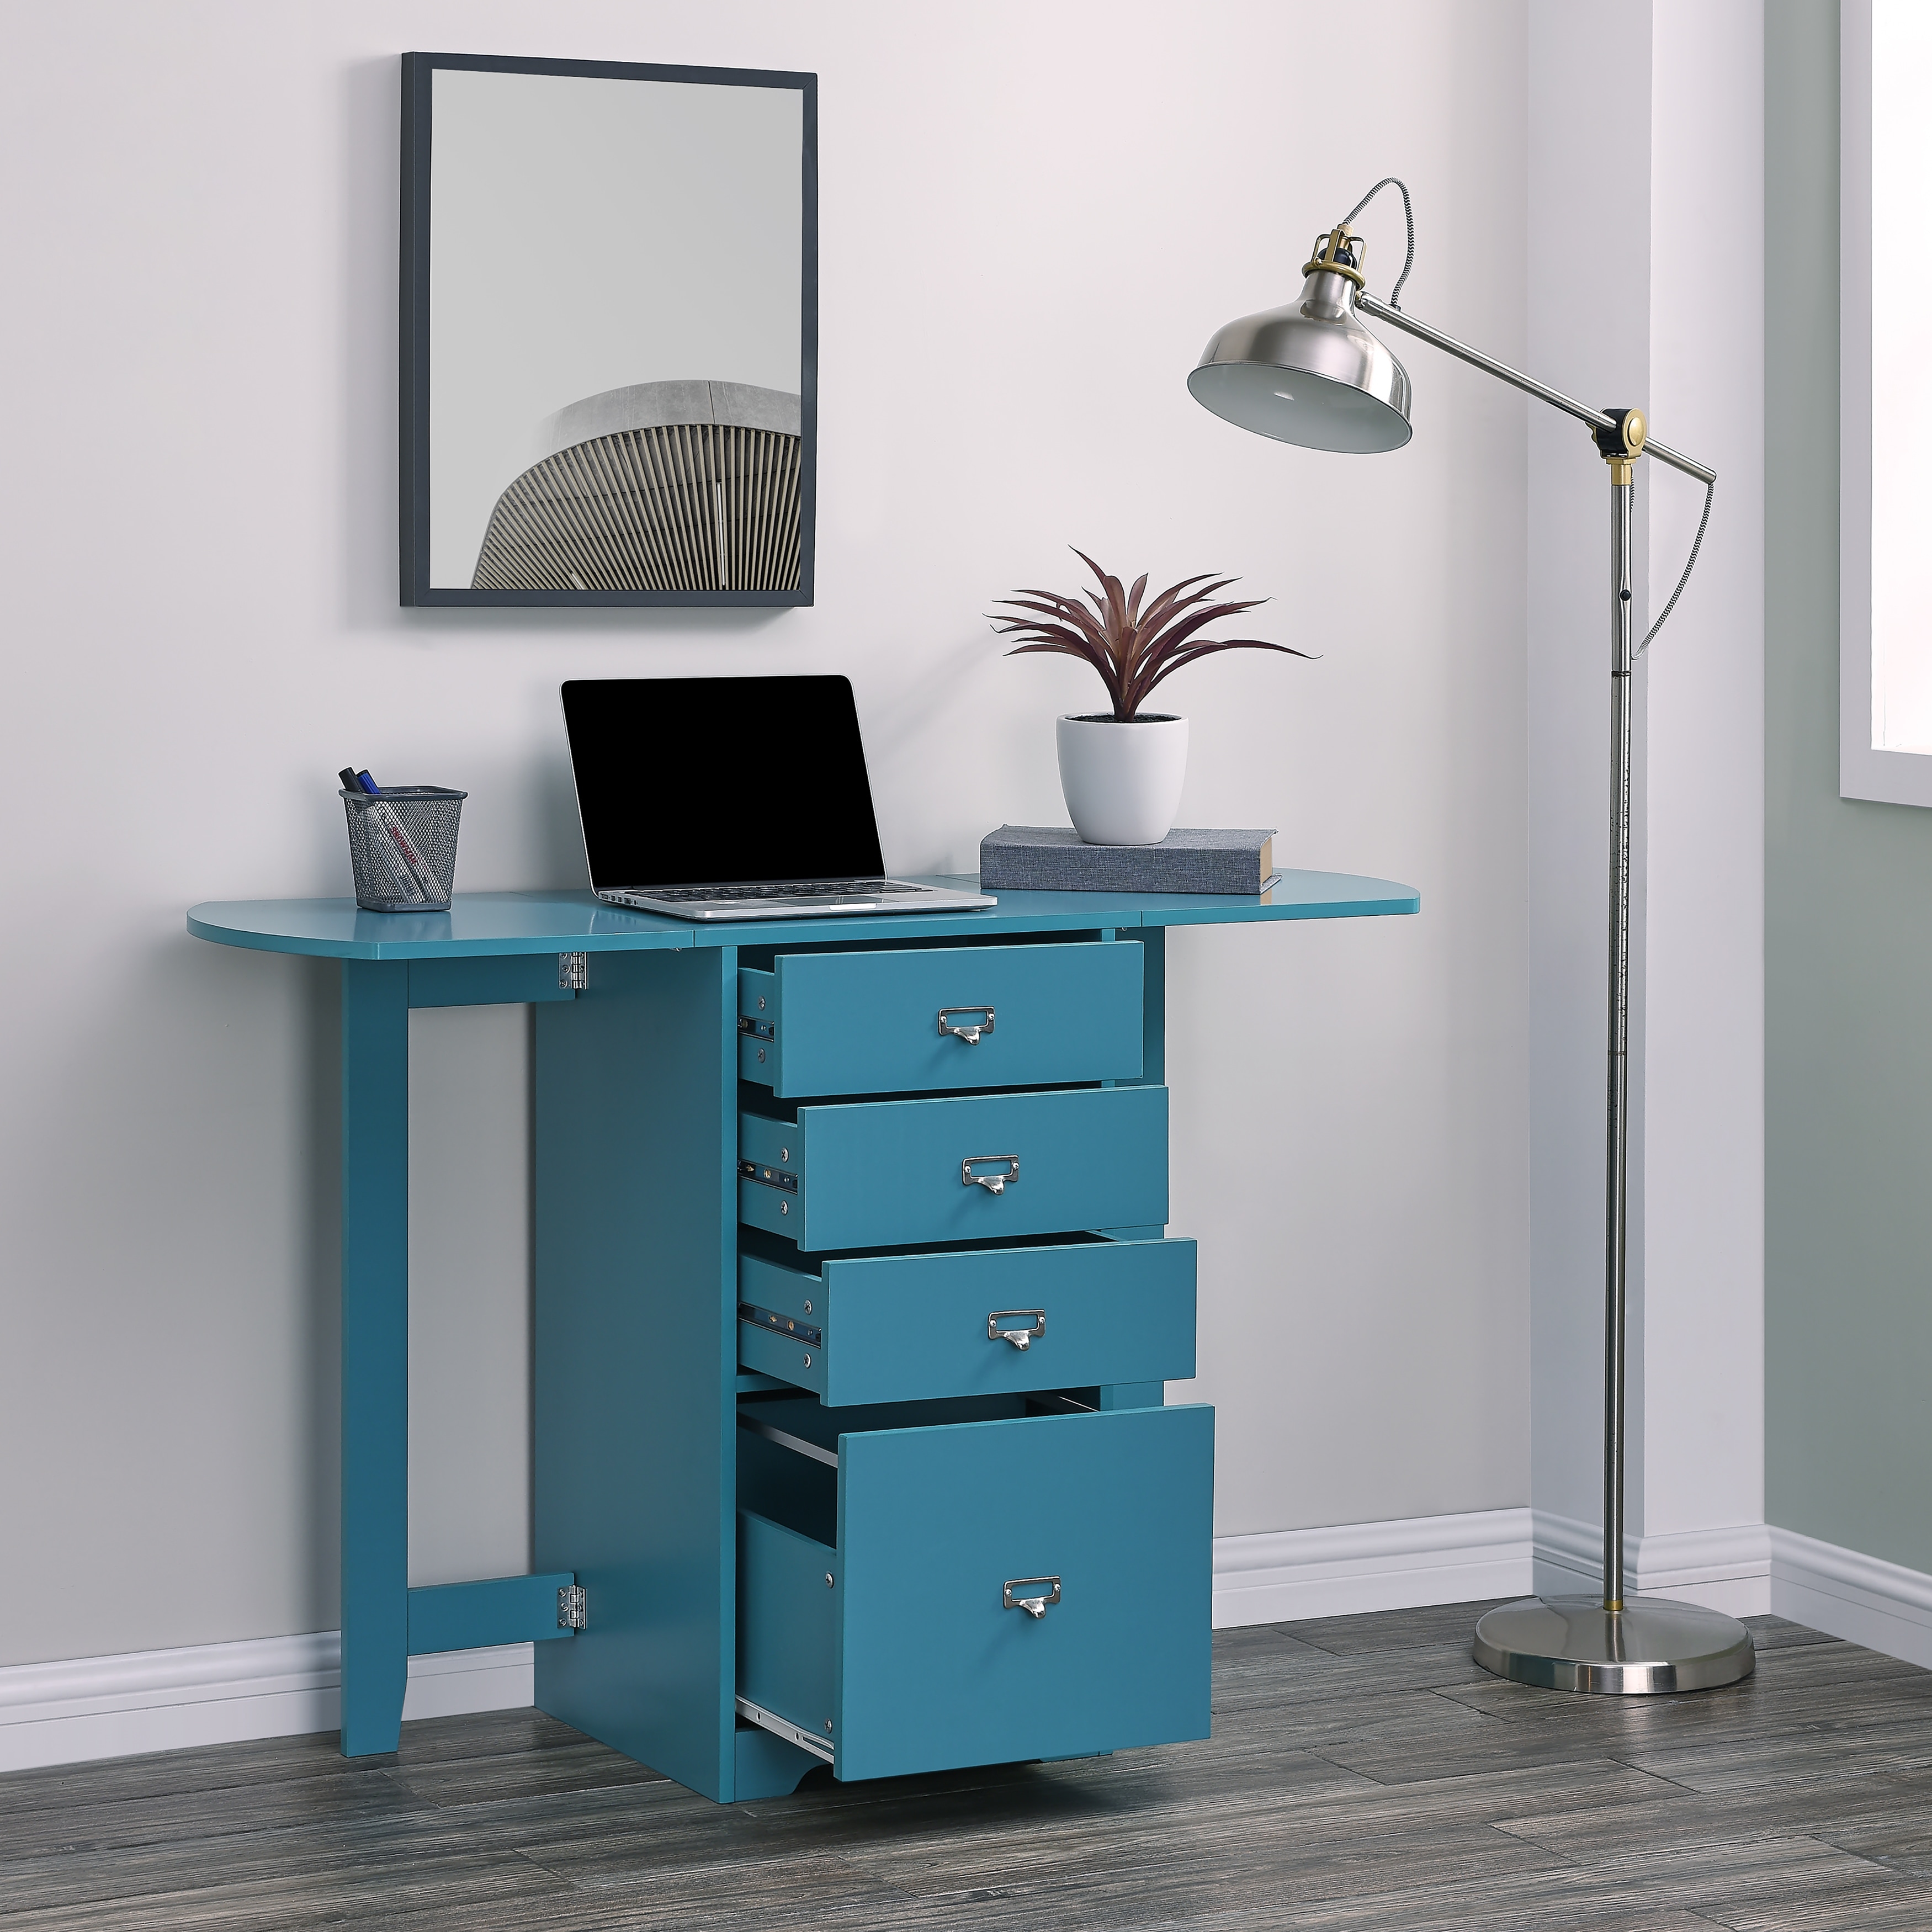 SEI Furniture Fold Out Organizer Convertible Desktop Craft Desk Table,  White, 1 Piece - Harris Teeter